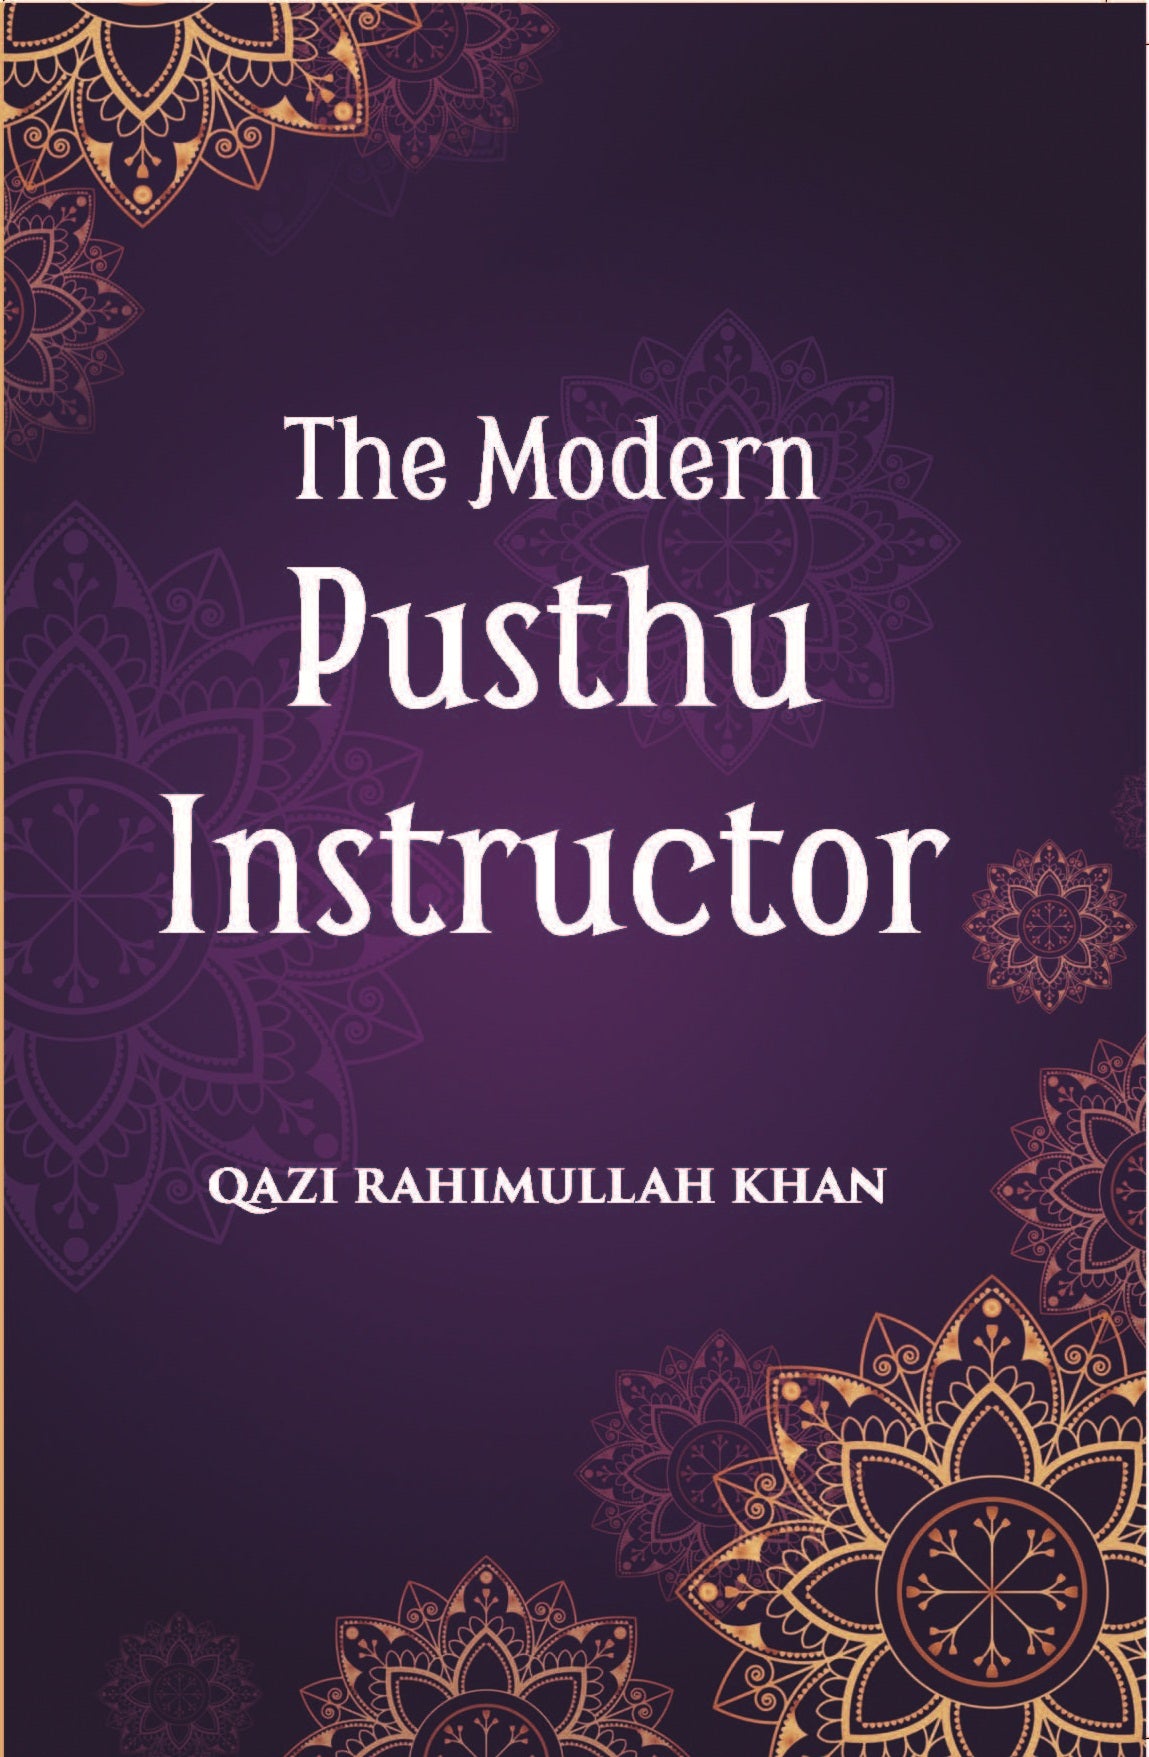 The Modern Pushtu Instructor